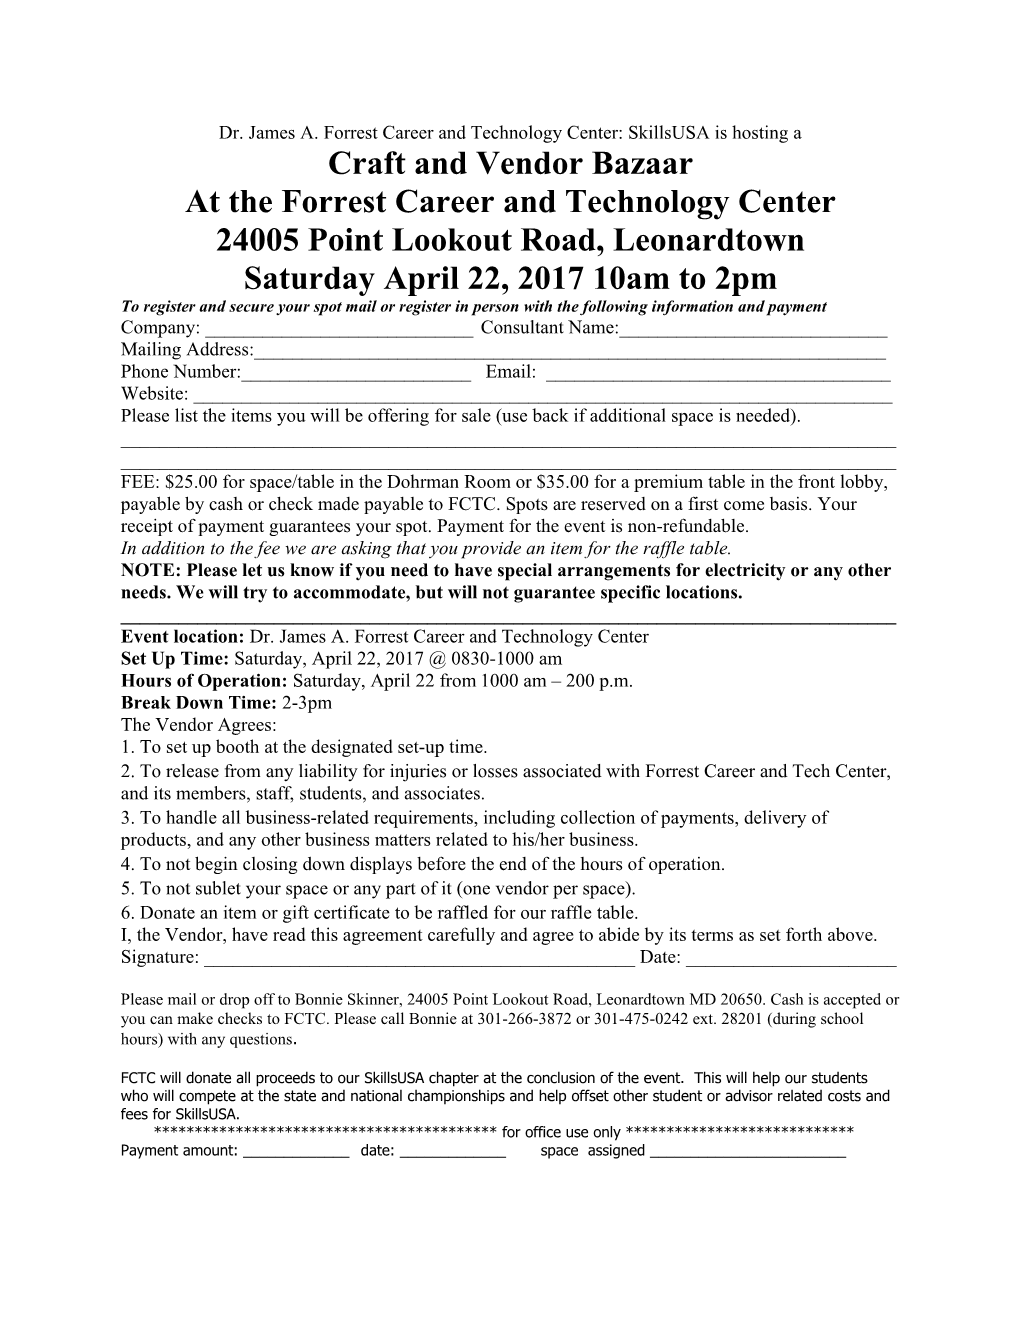 Dr. James A. Forrest Career and Technology Center: Skillsusa Is Hosting A